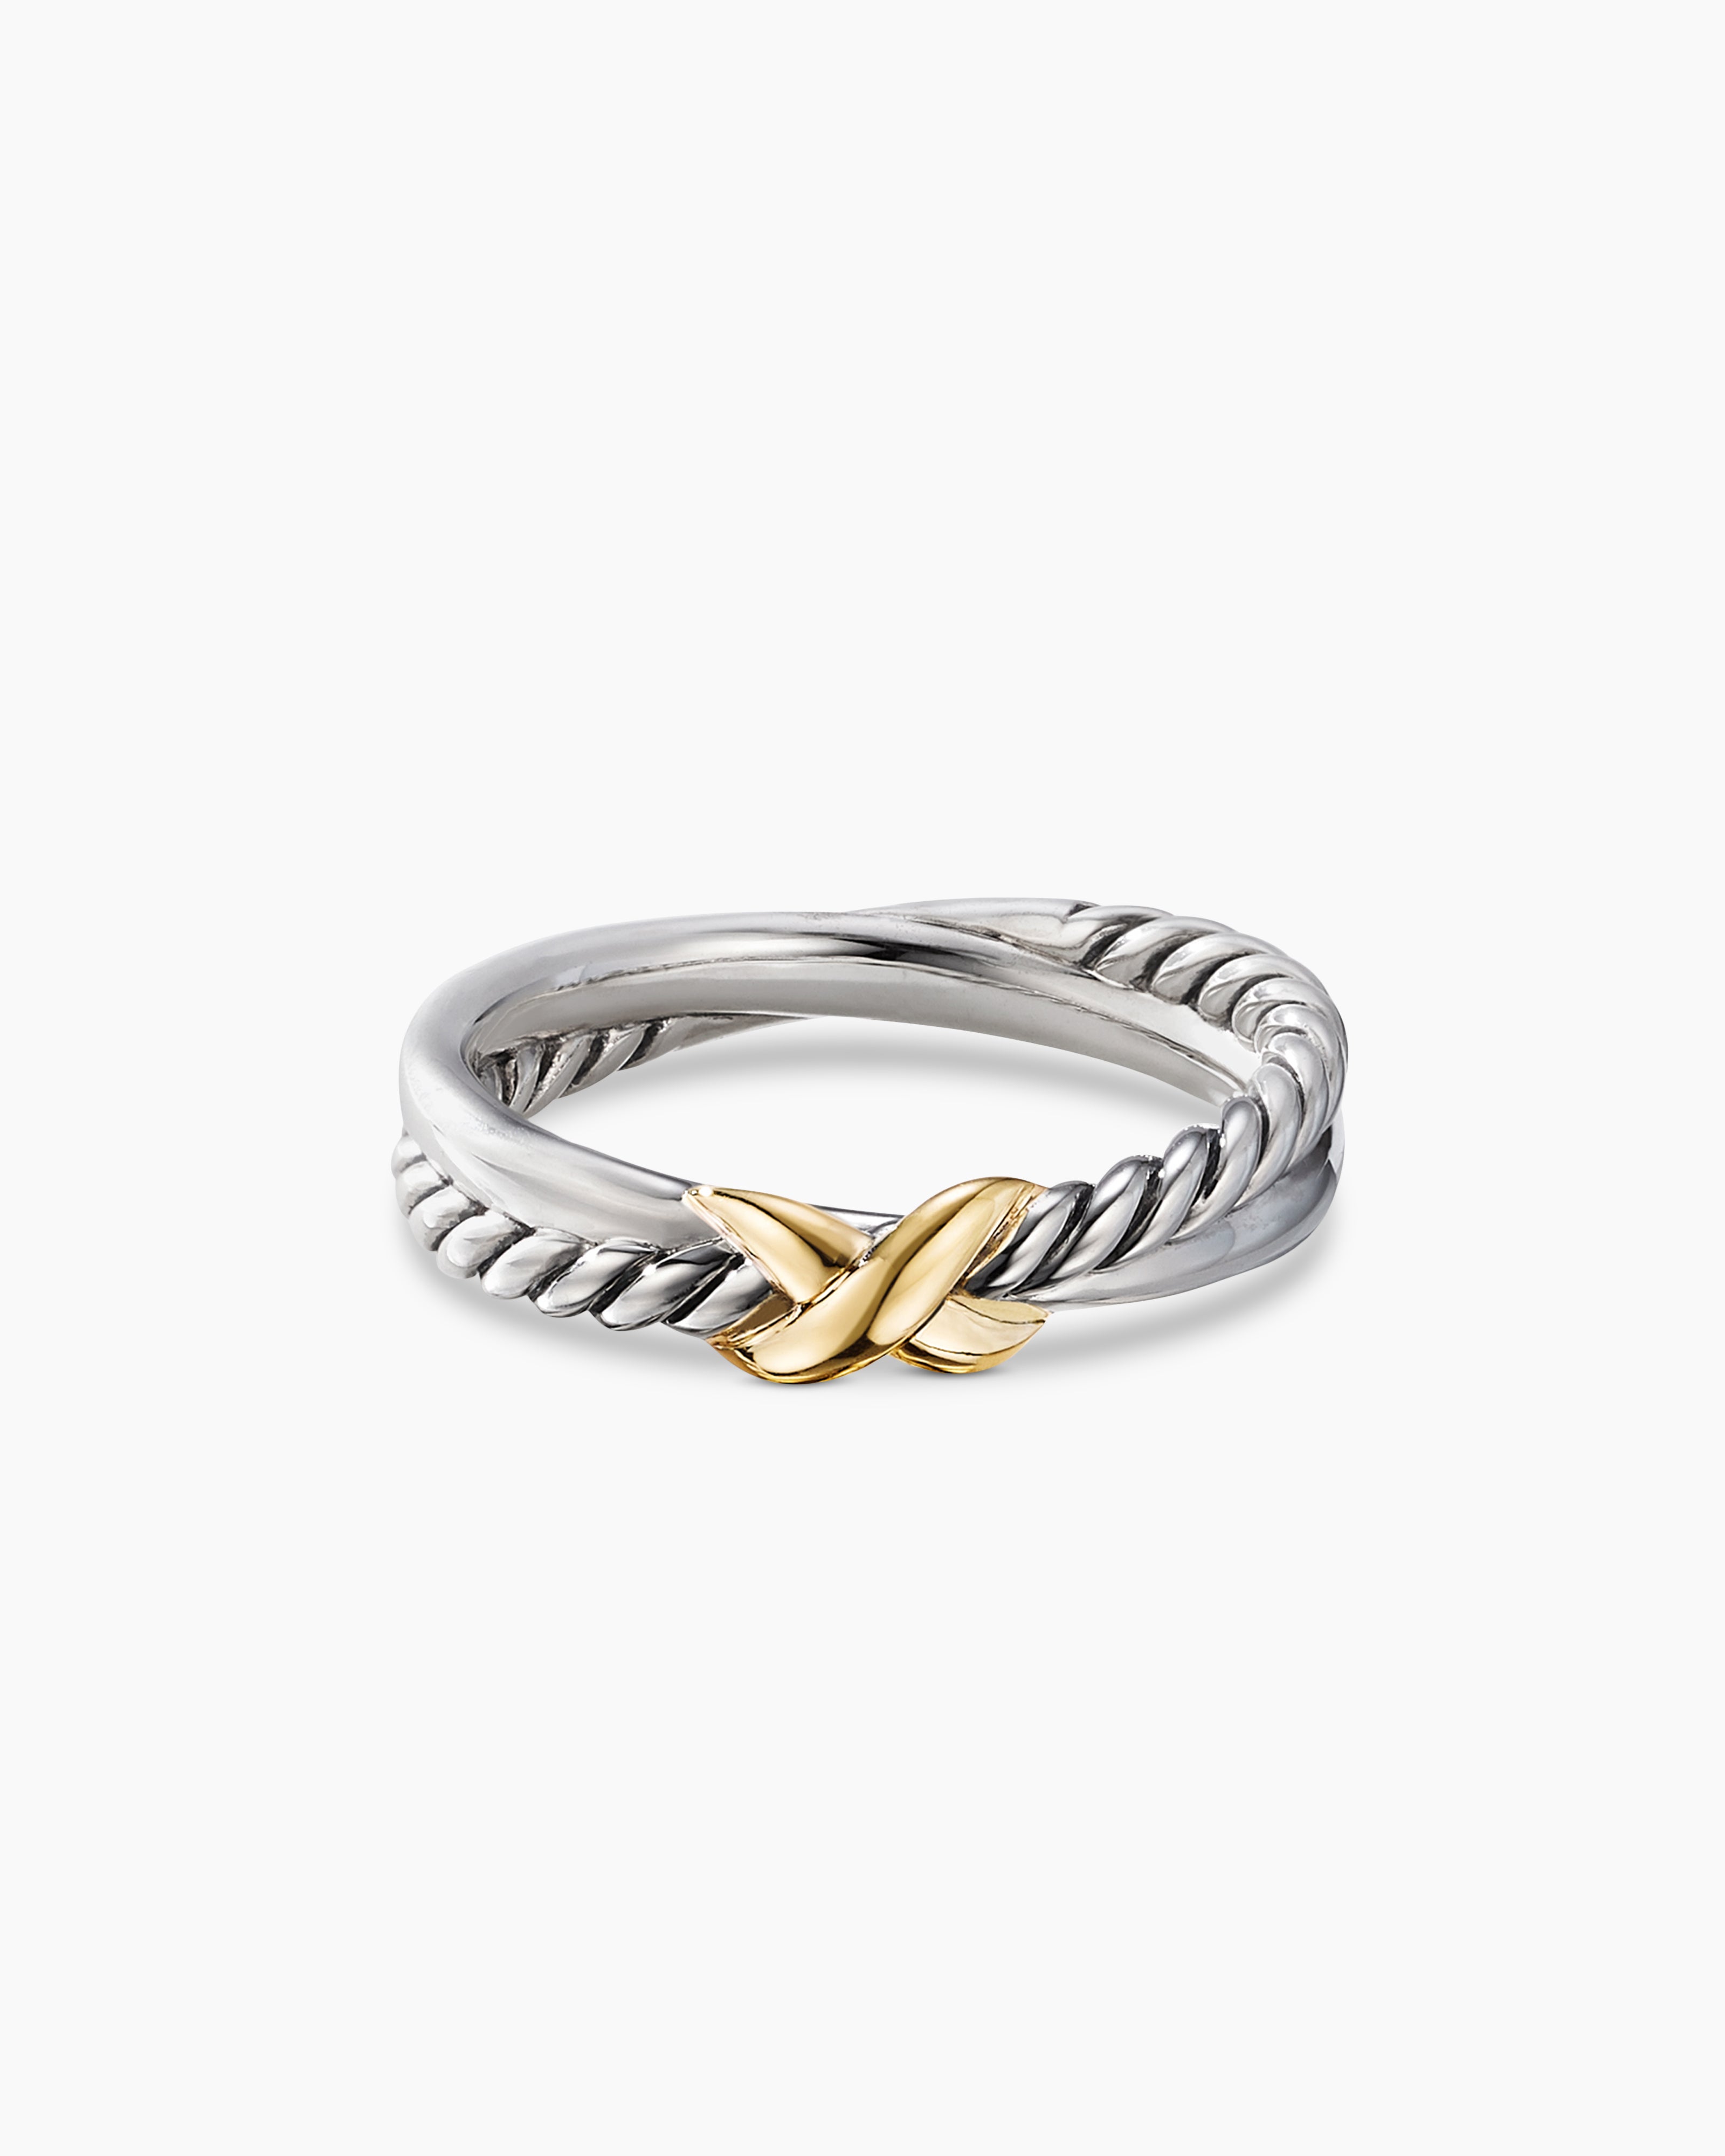 David Yurman x Crossover Ring with Gold